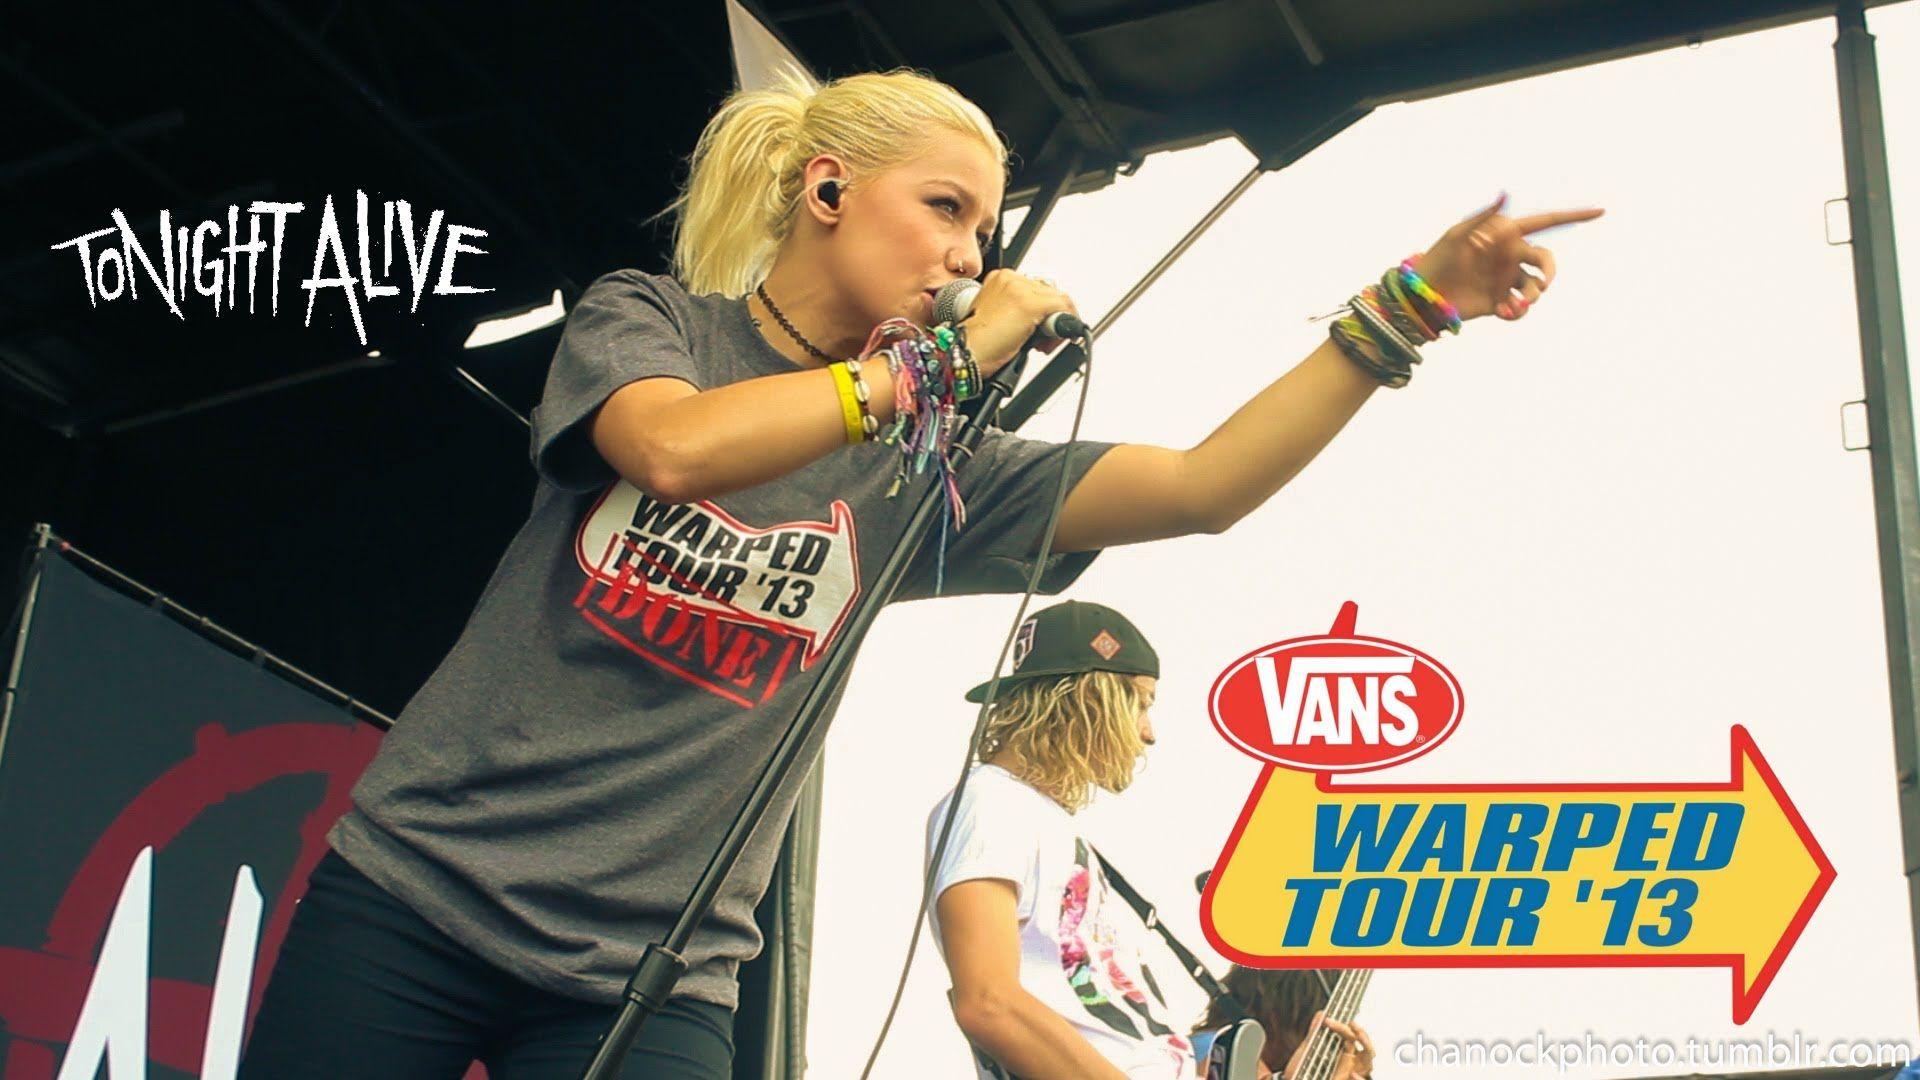 Tonight alive Live Vans Warped Tour 2013 Houston Texas